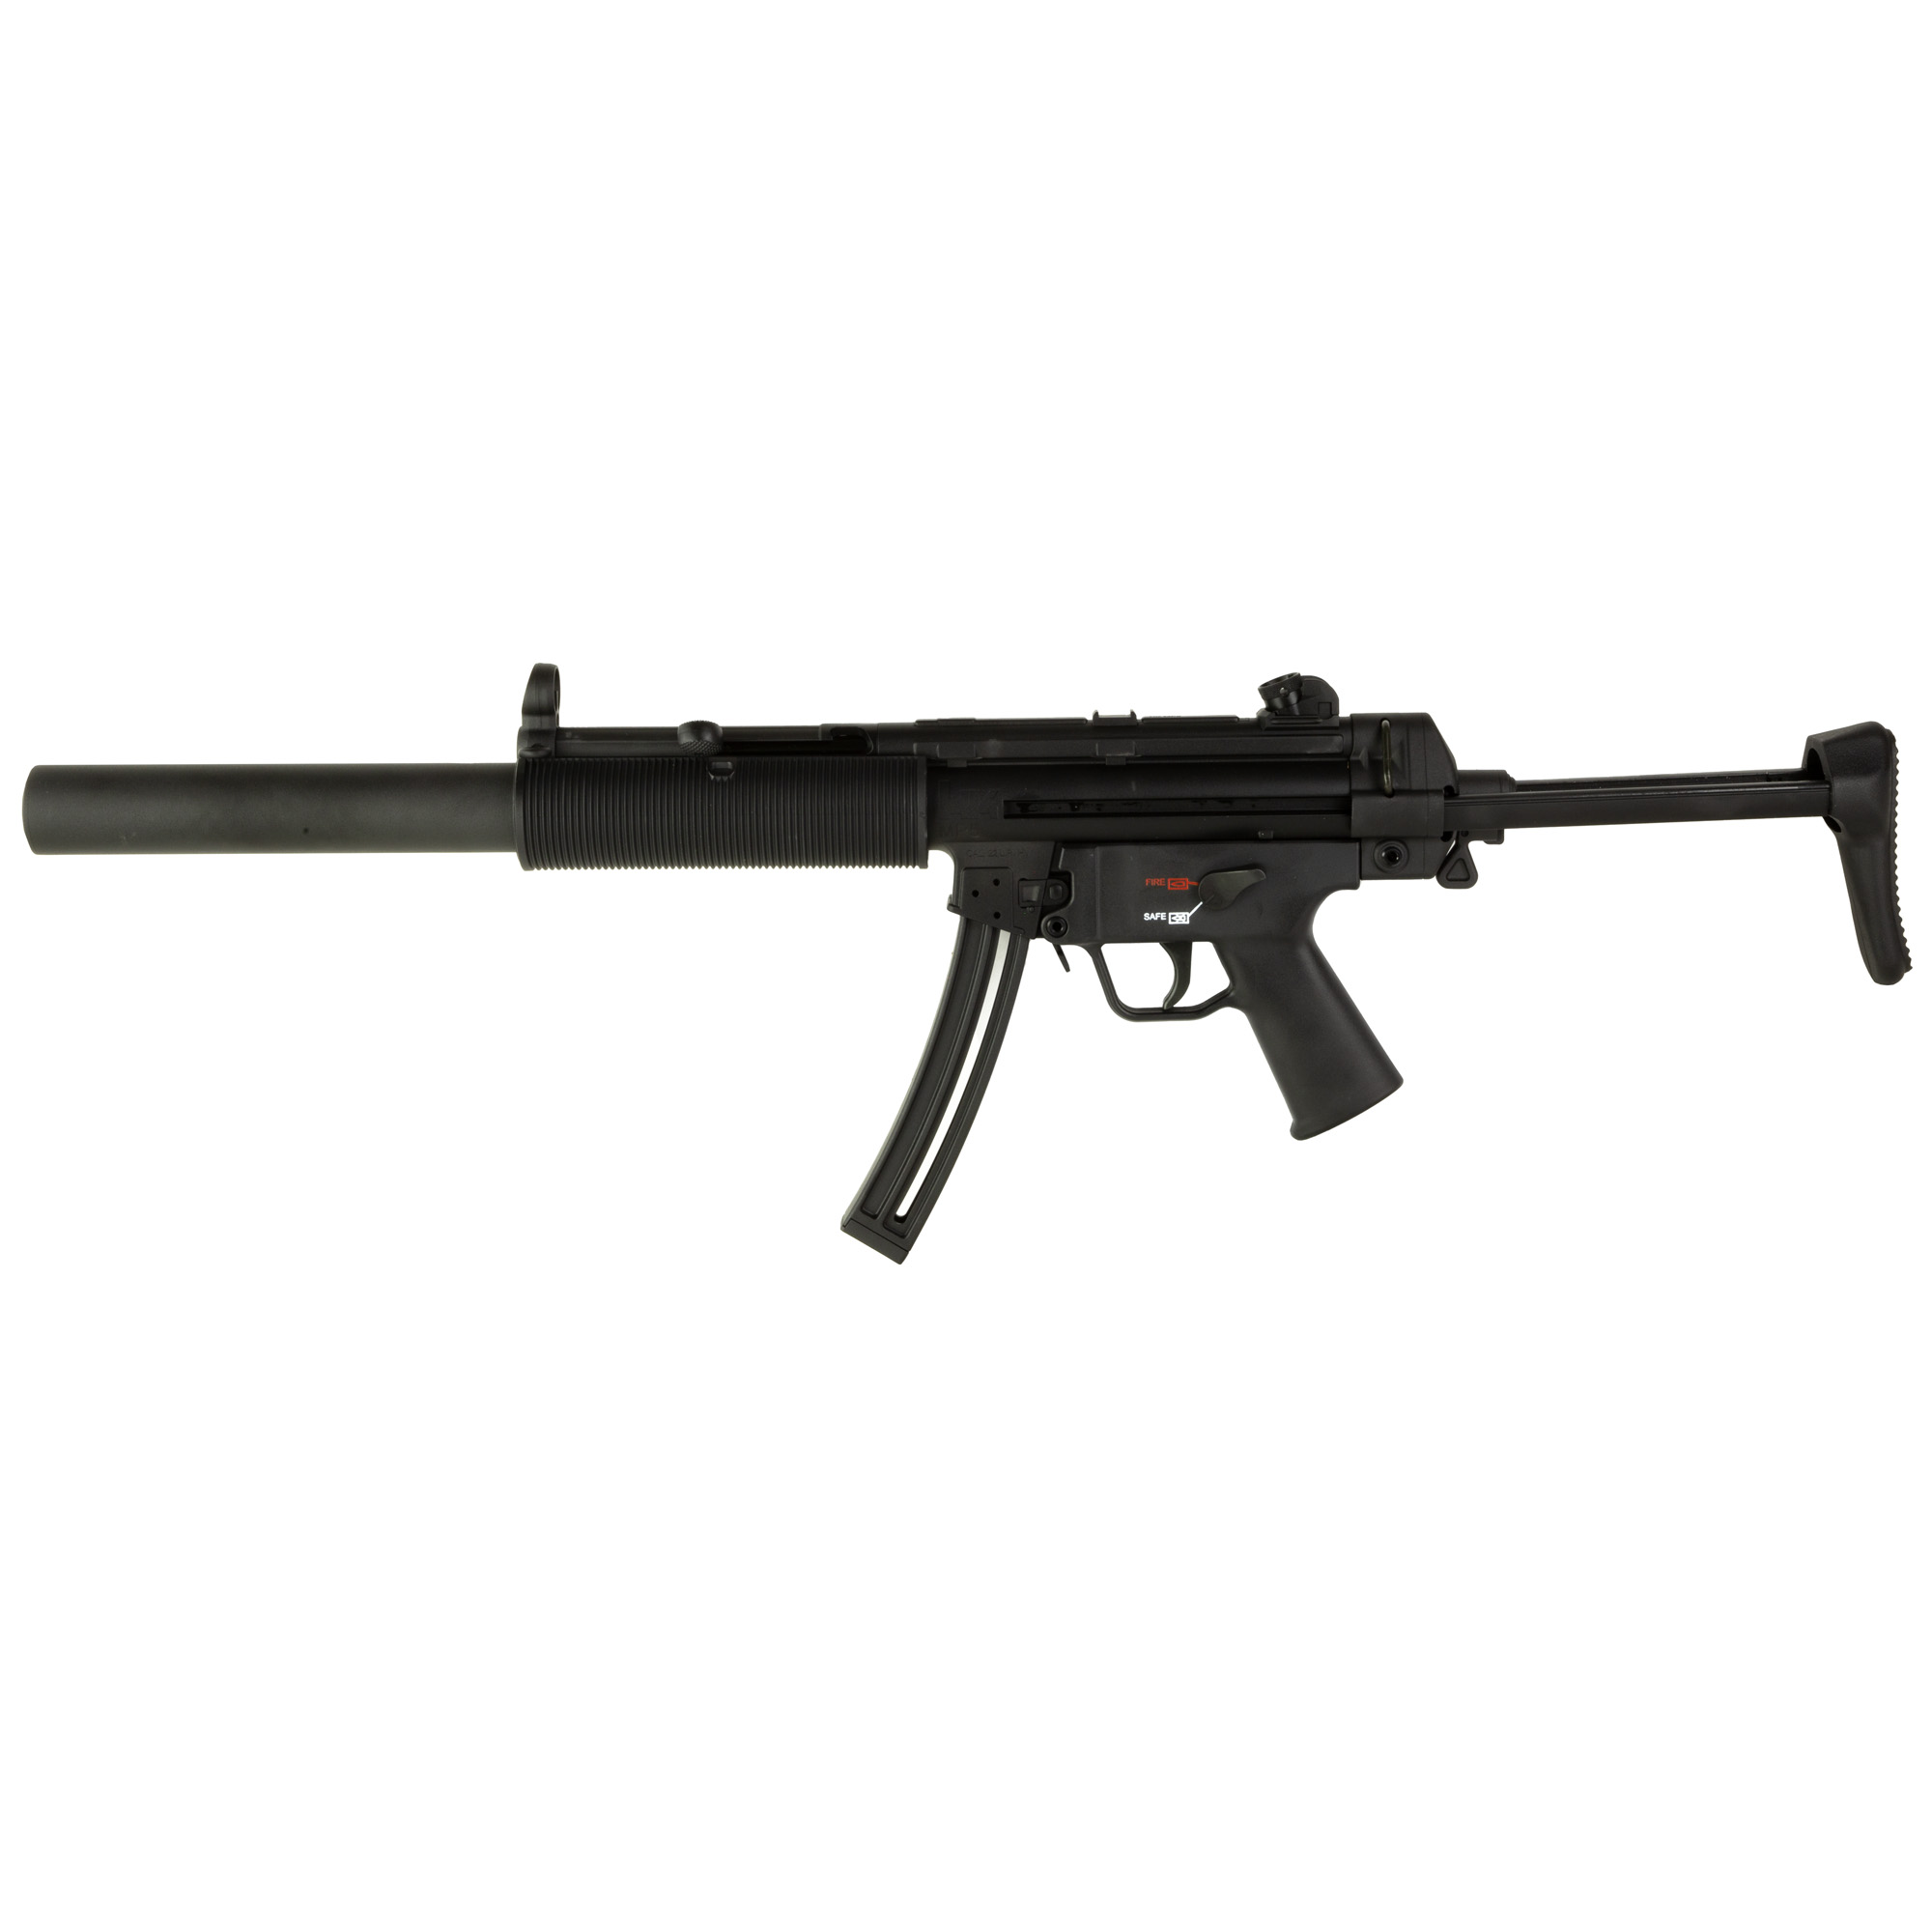 HK MP5 RFL 22LR 16.1 25RD BLK